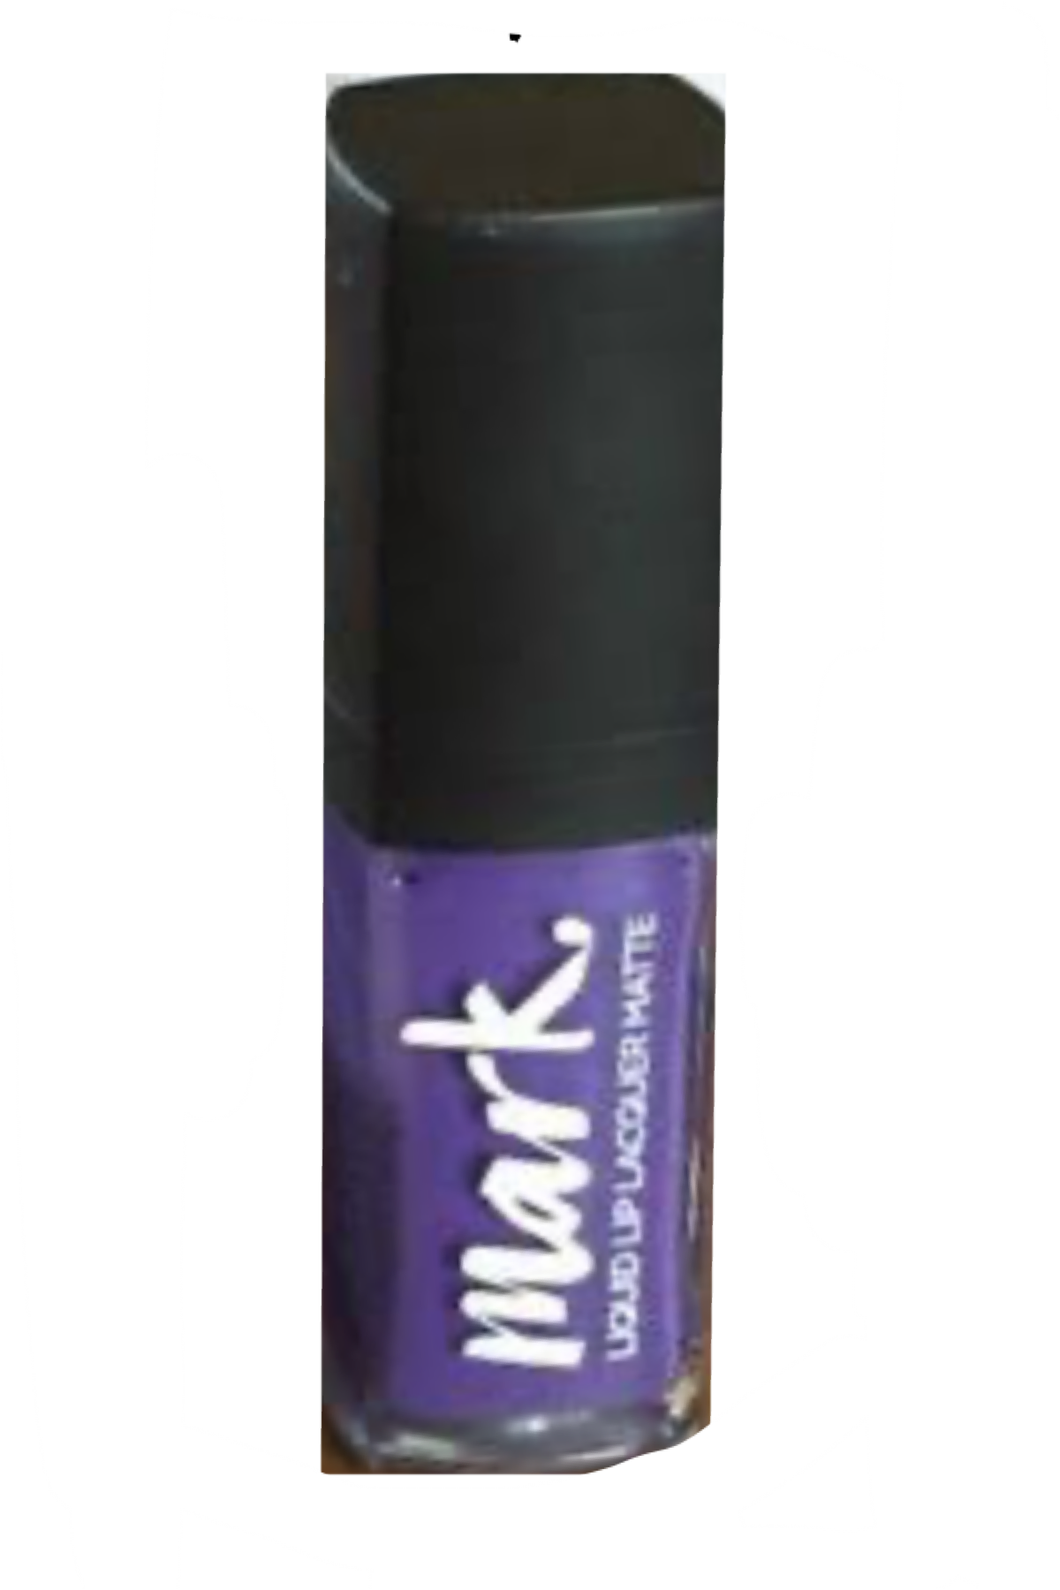 Plump up the Jam Mark Matte Liquid Lip Lacquer